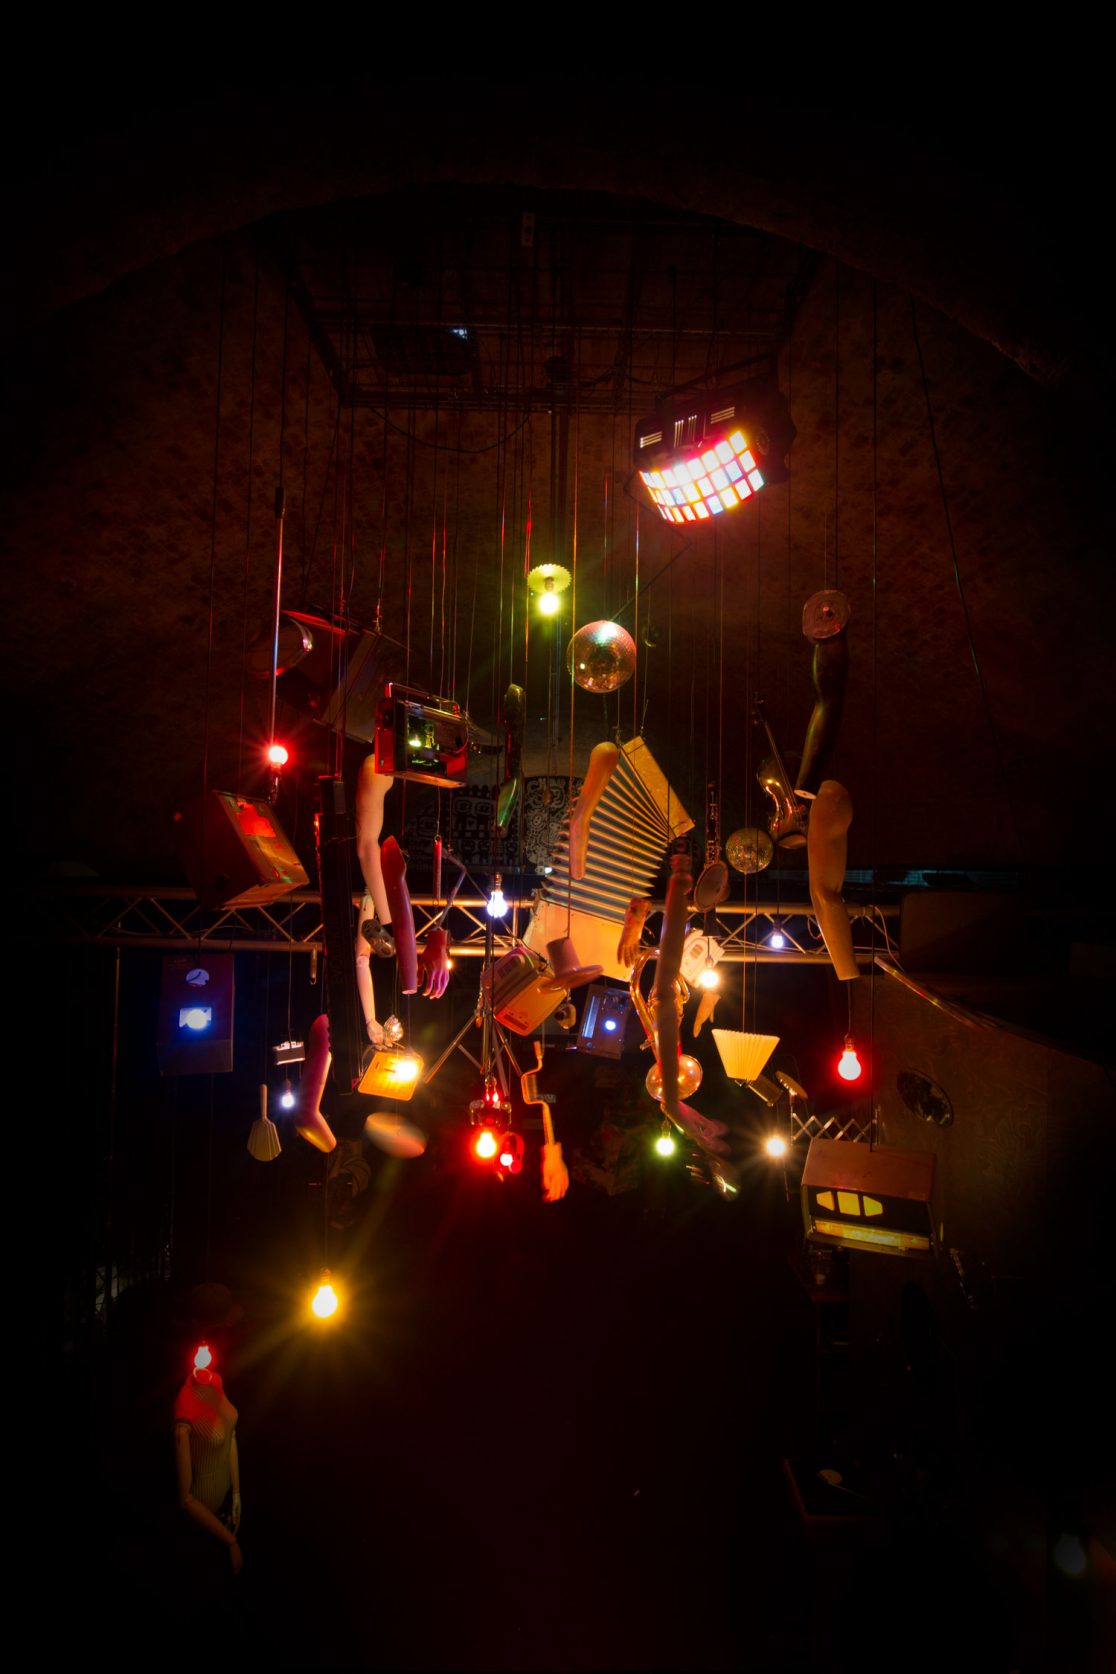 Memory Light, an art installation in a Sound Art Venue in Leake St